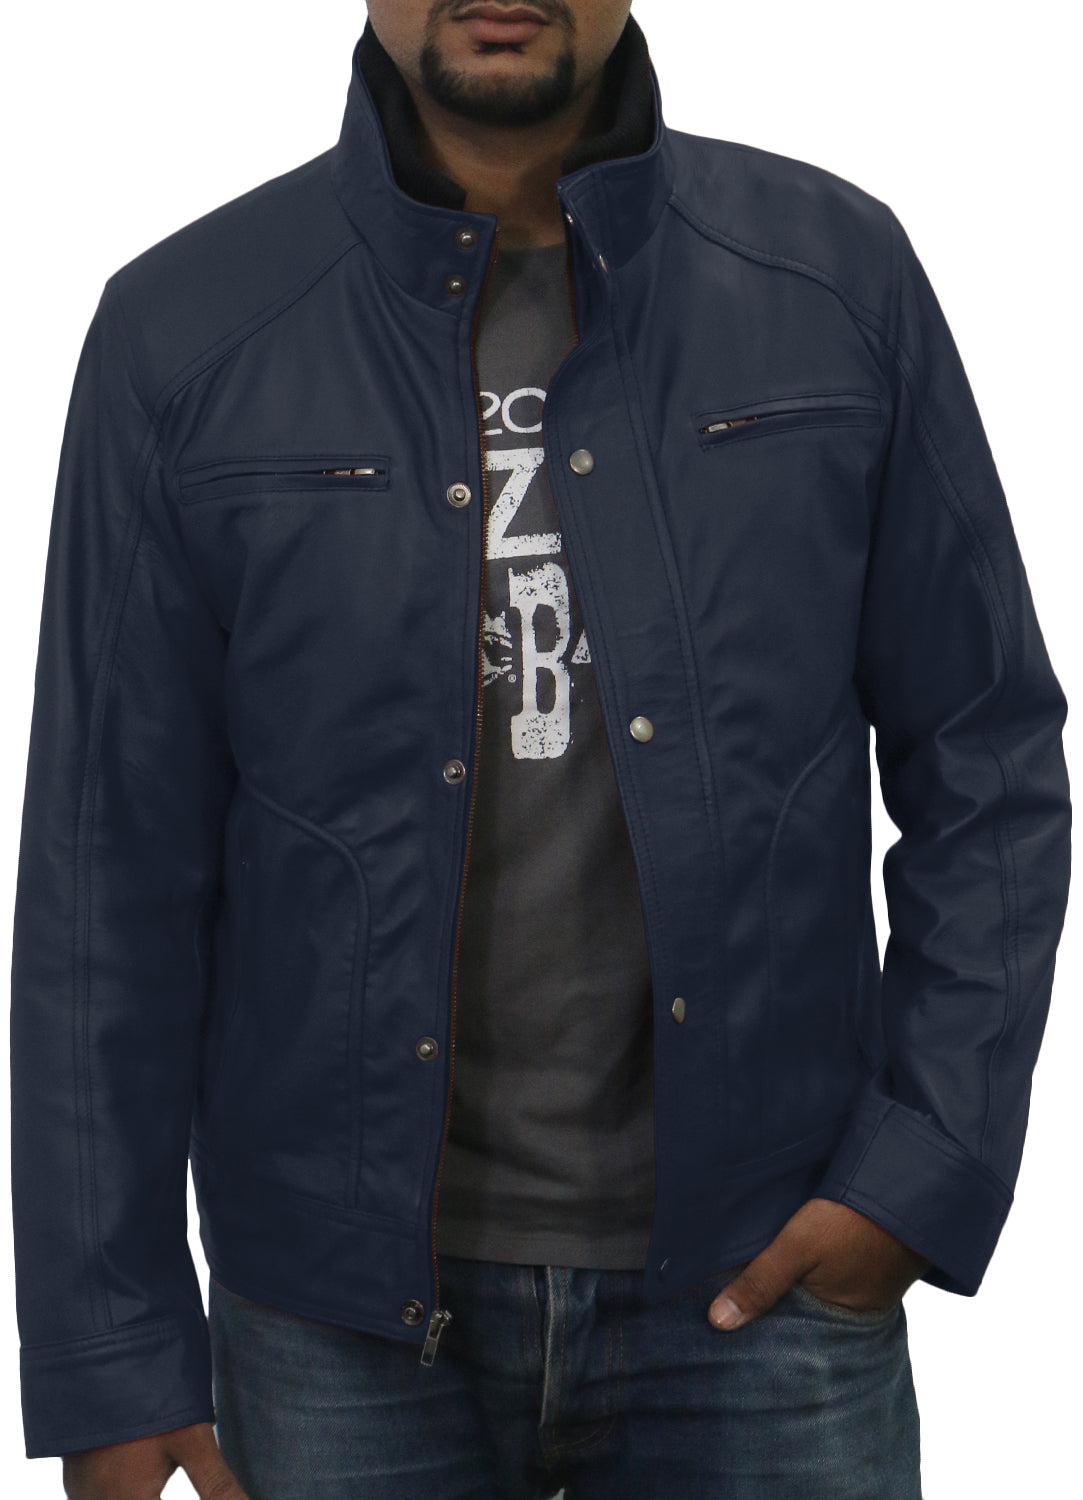 Leather Jackets Hub Mens Genuine Lambskin Leather Jacket (Black, Fencing Jacket) - 1501101